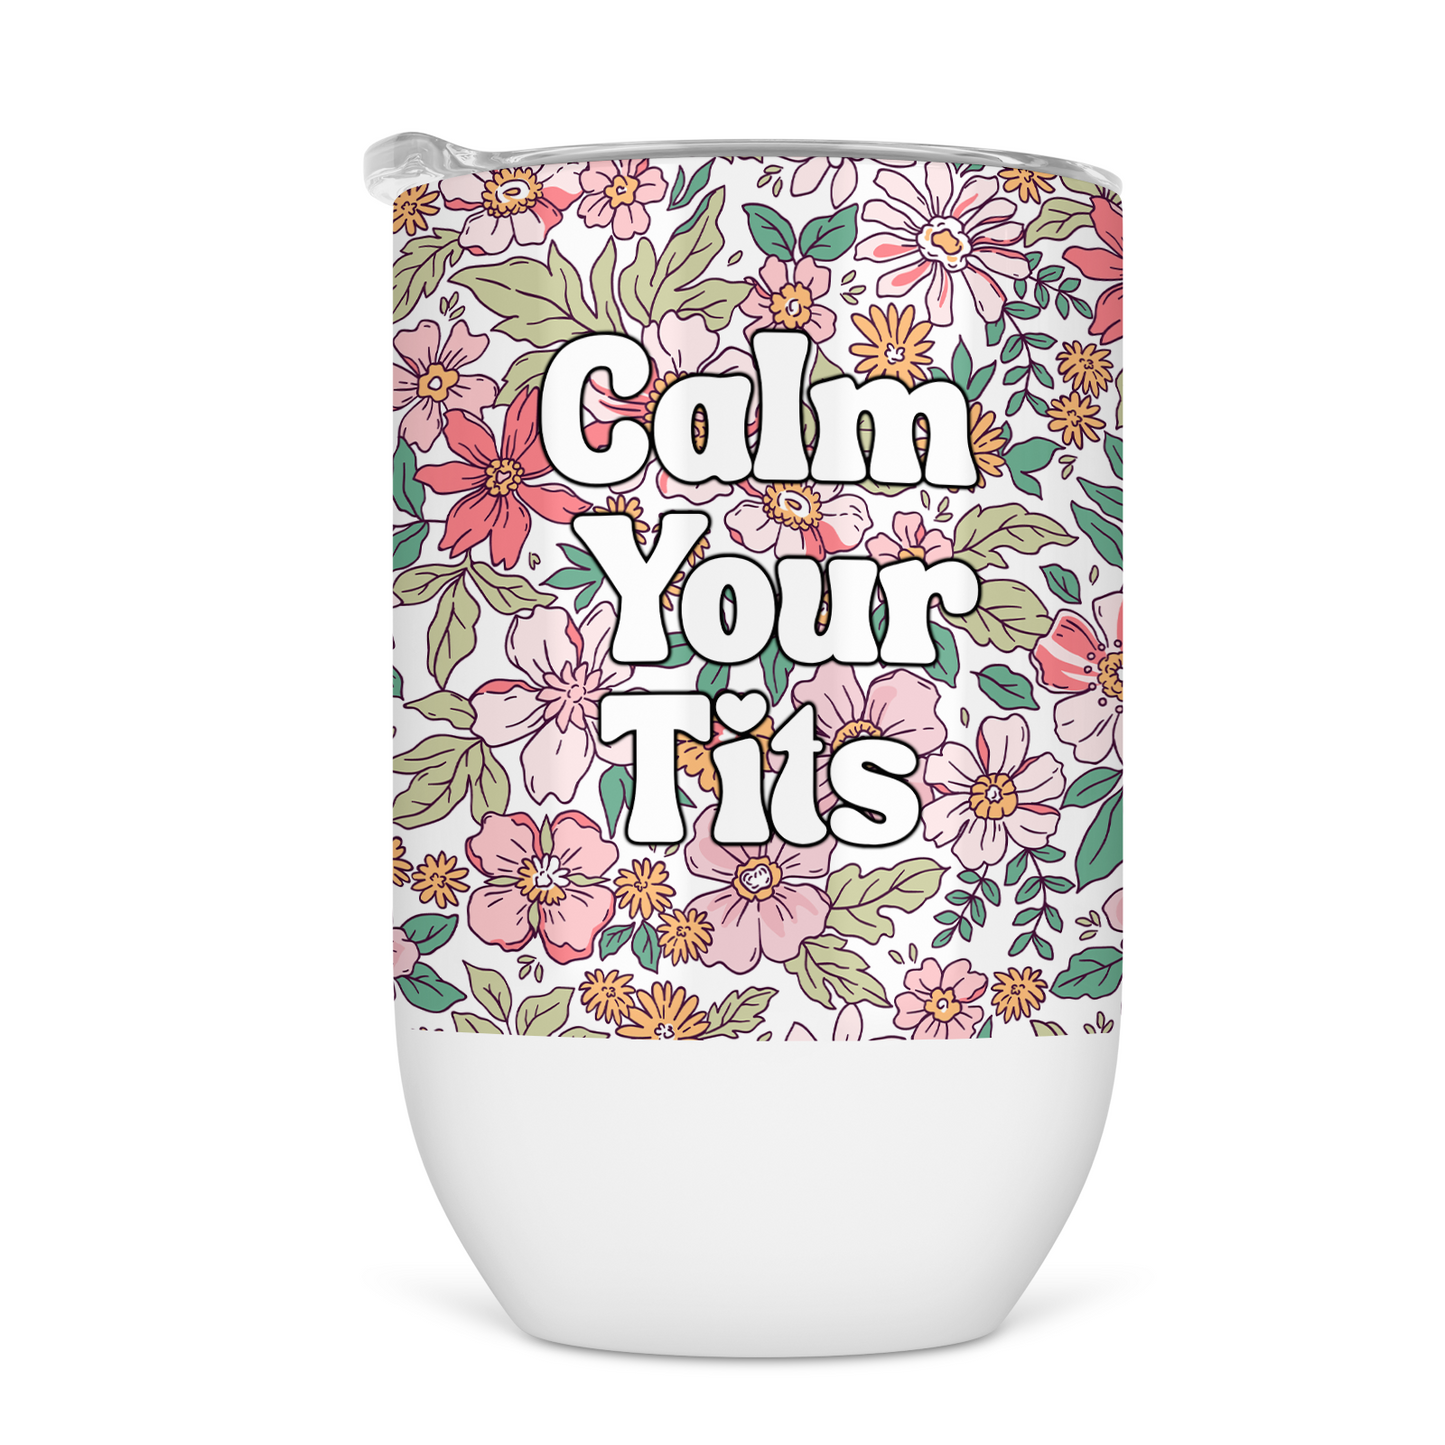 Calm Your Tits Wine Tumbler